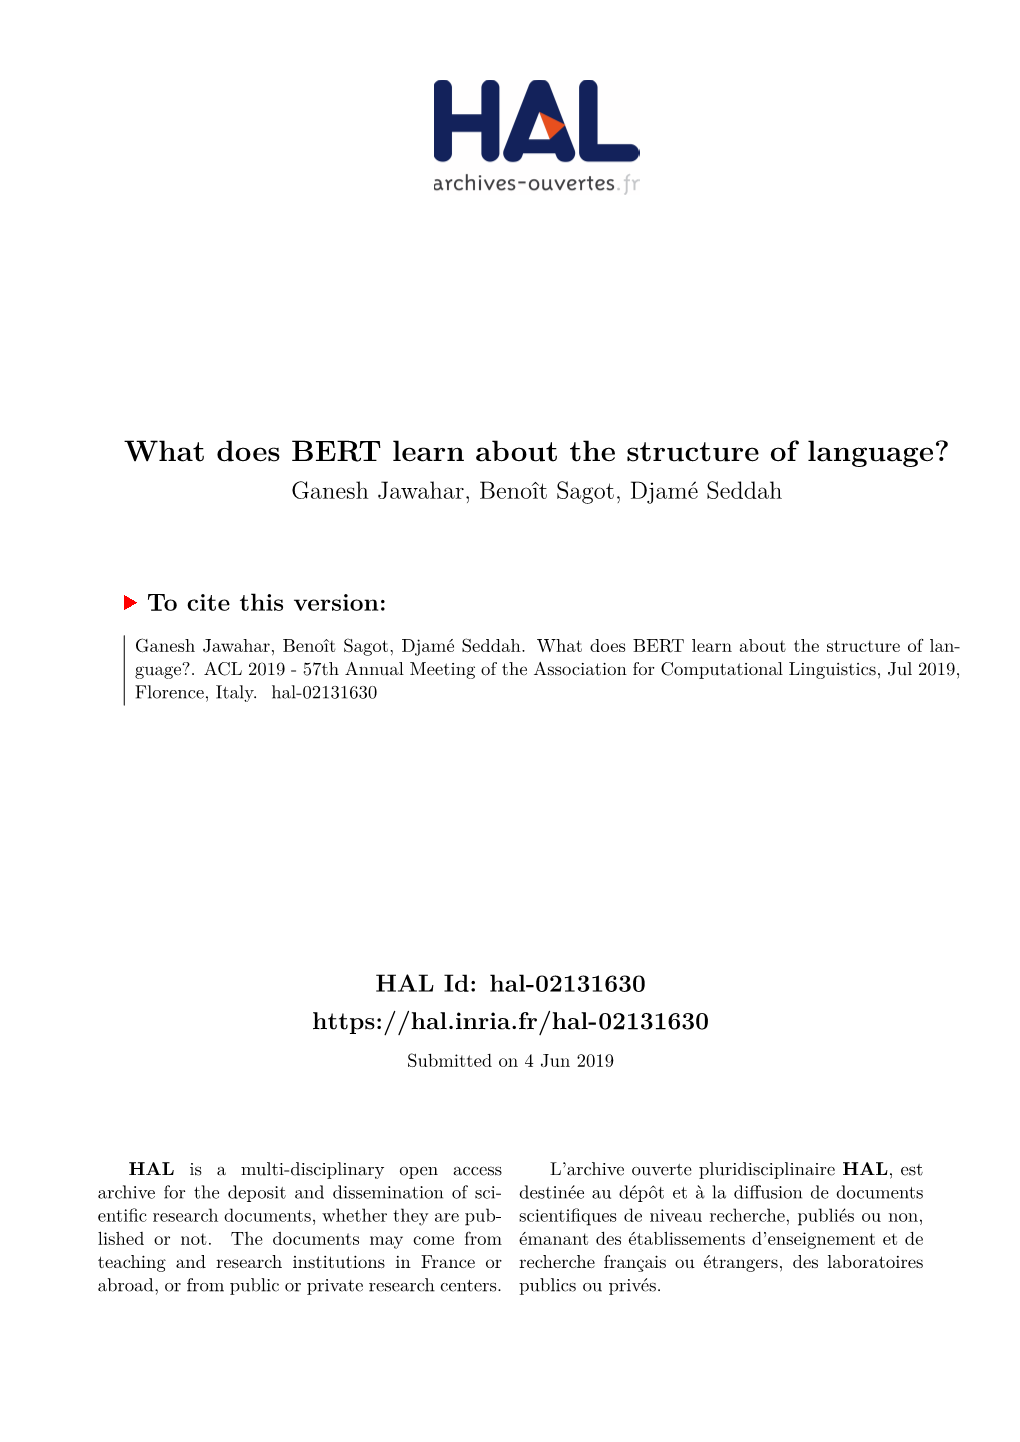 What Does BERT Learn About the Structure of Language? Ganesh Jawahar, Benoît Sagot, Djamé Seddah